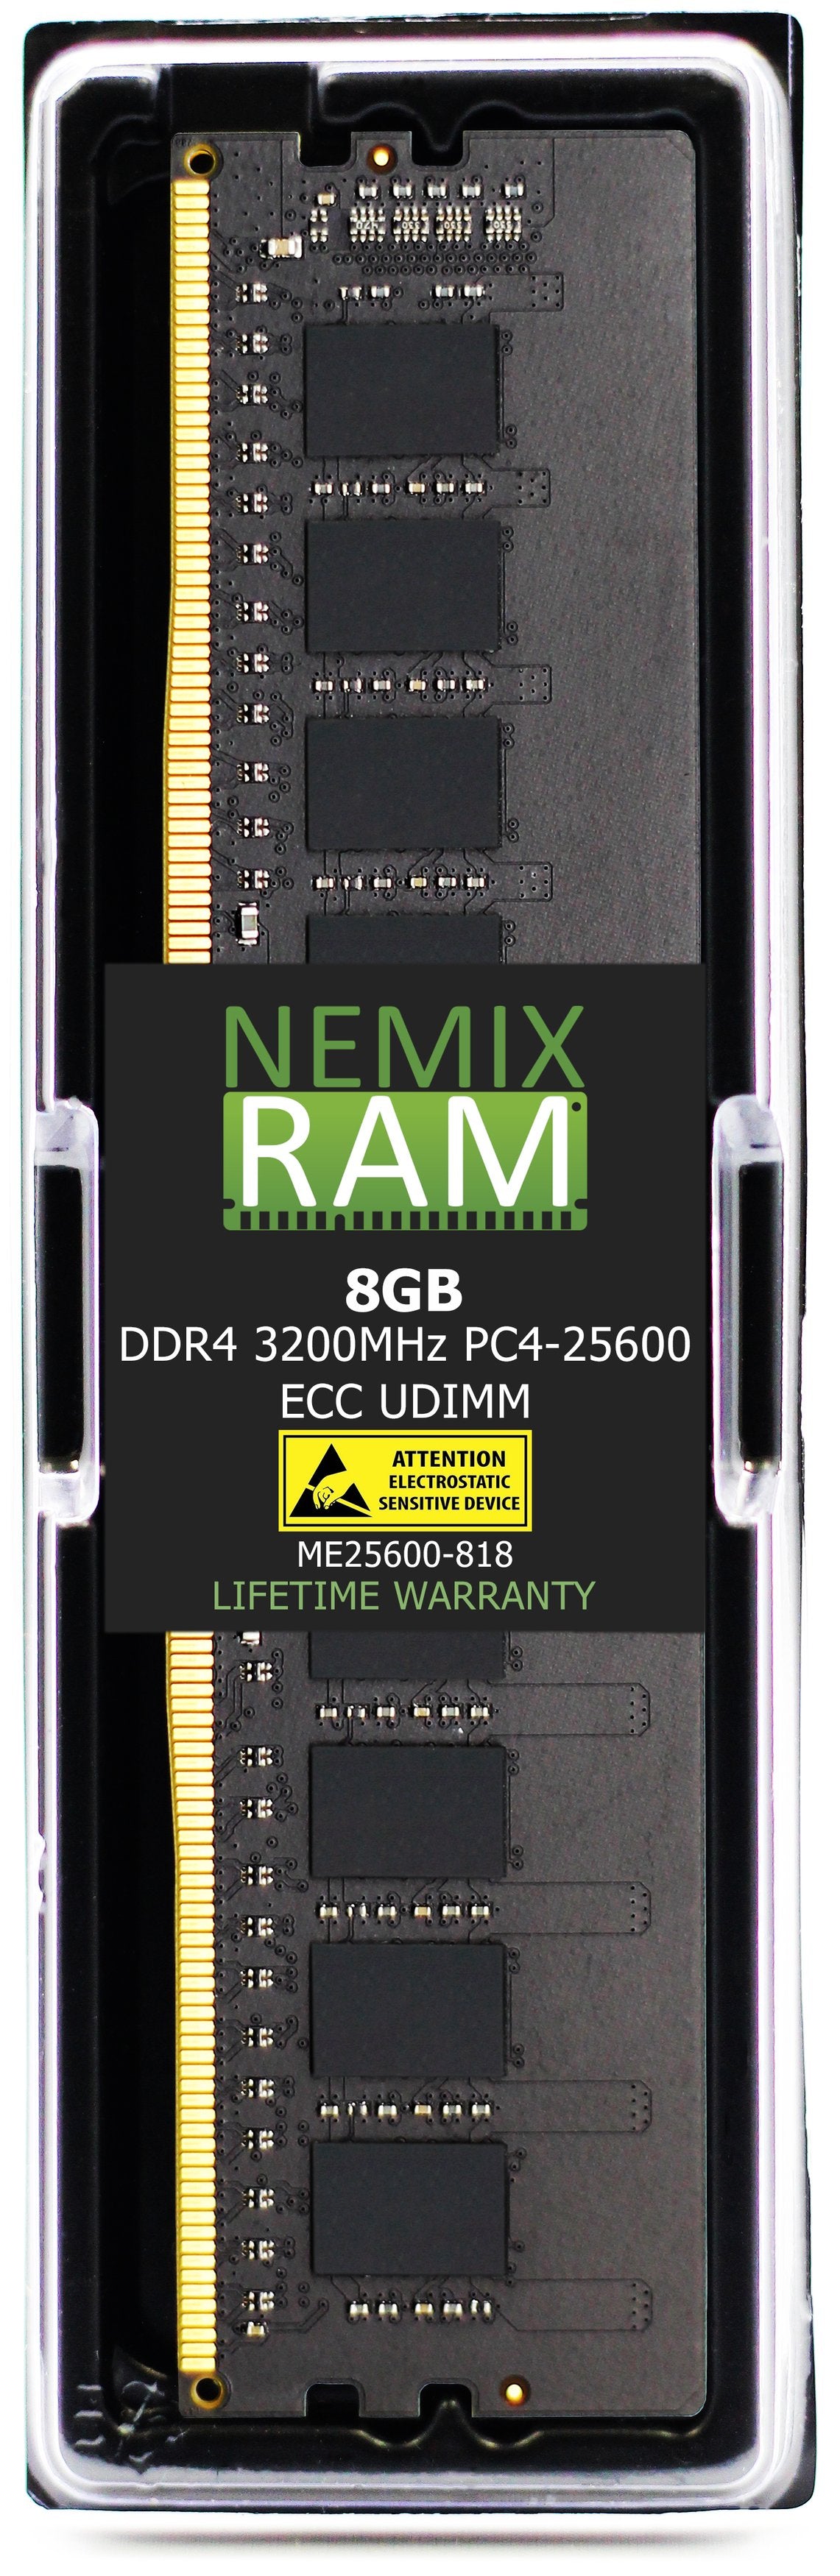 DDR4 3200MHZ PC4-25600 ECC UDIMM for ASUS Pro WS WRX80E-SAGE SE WIFI